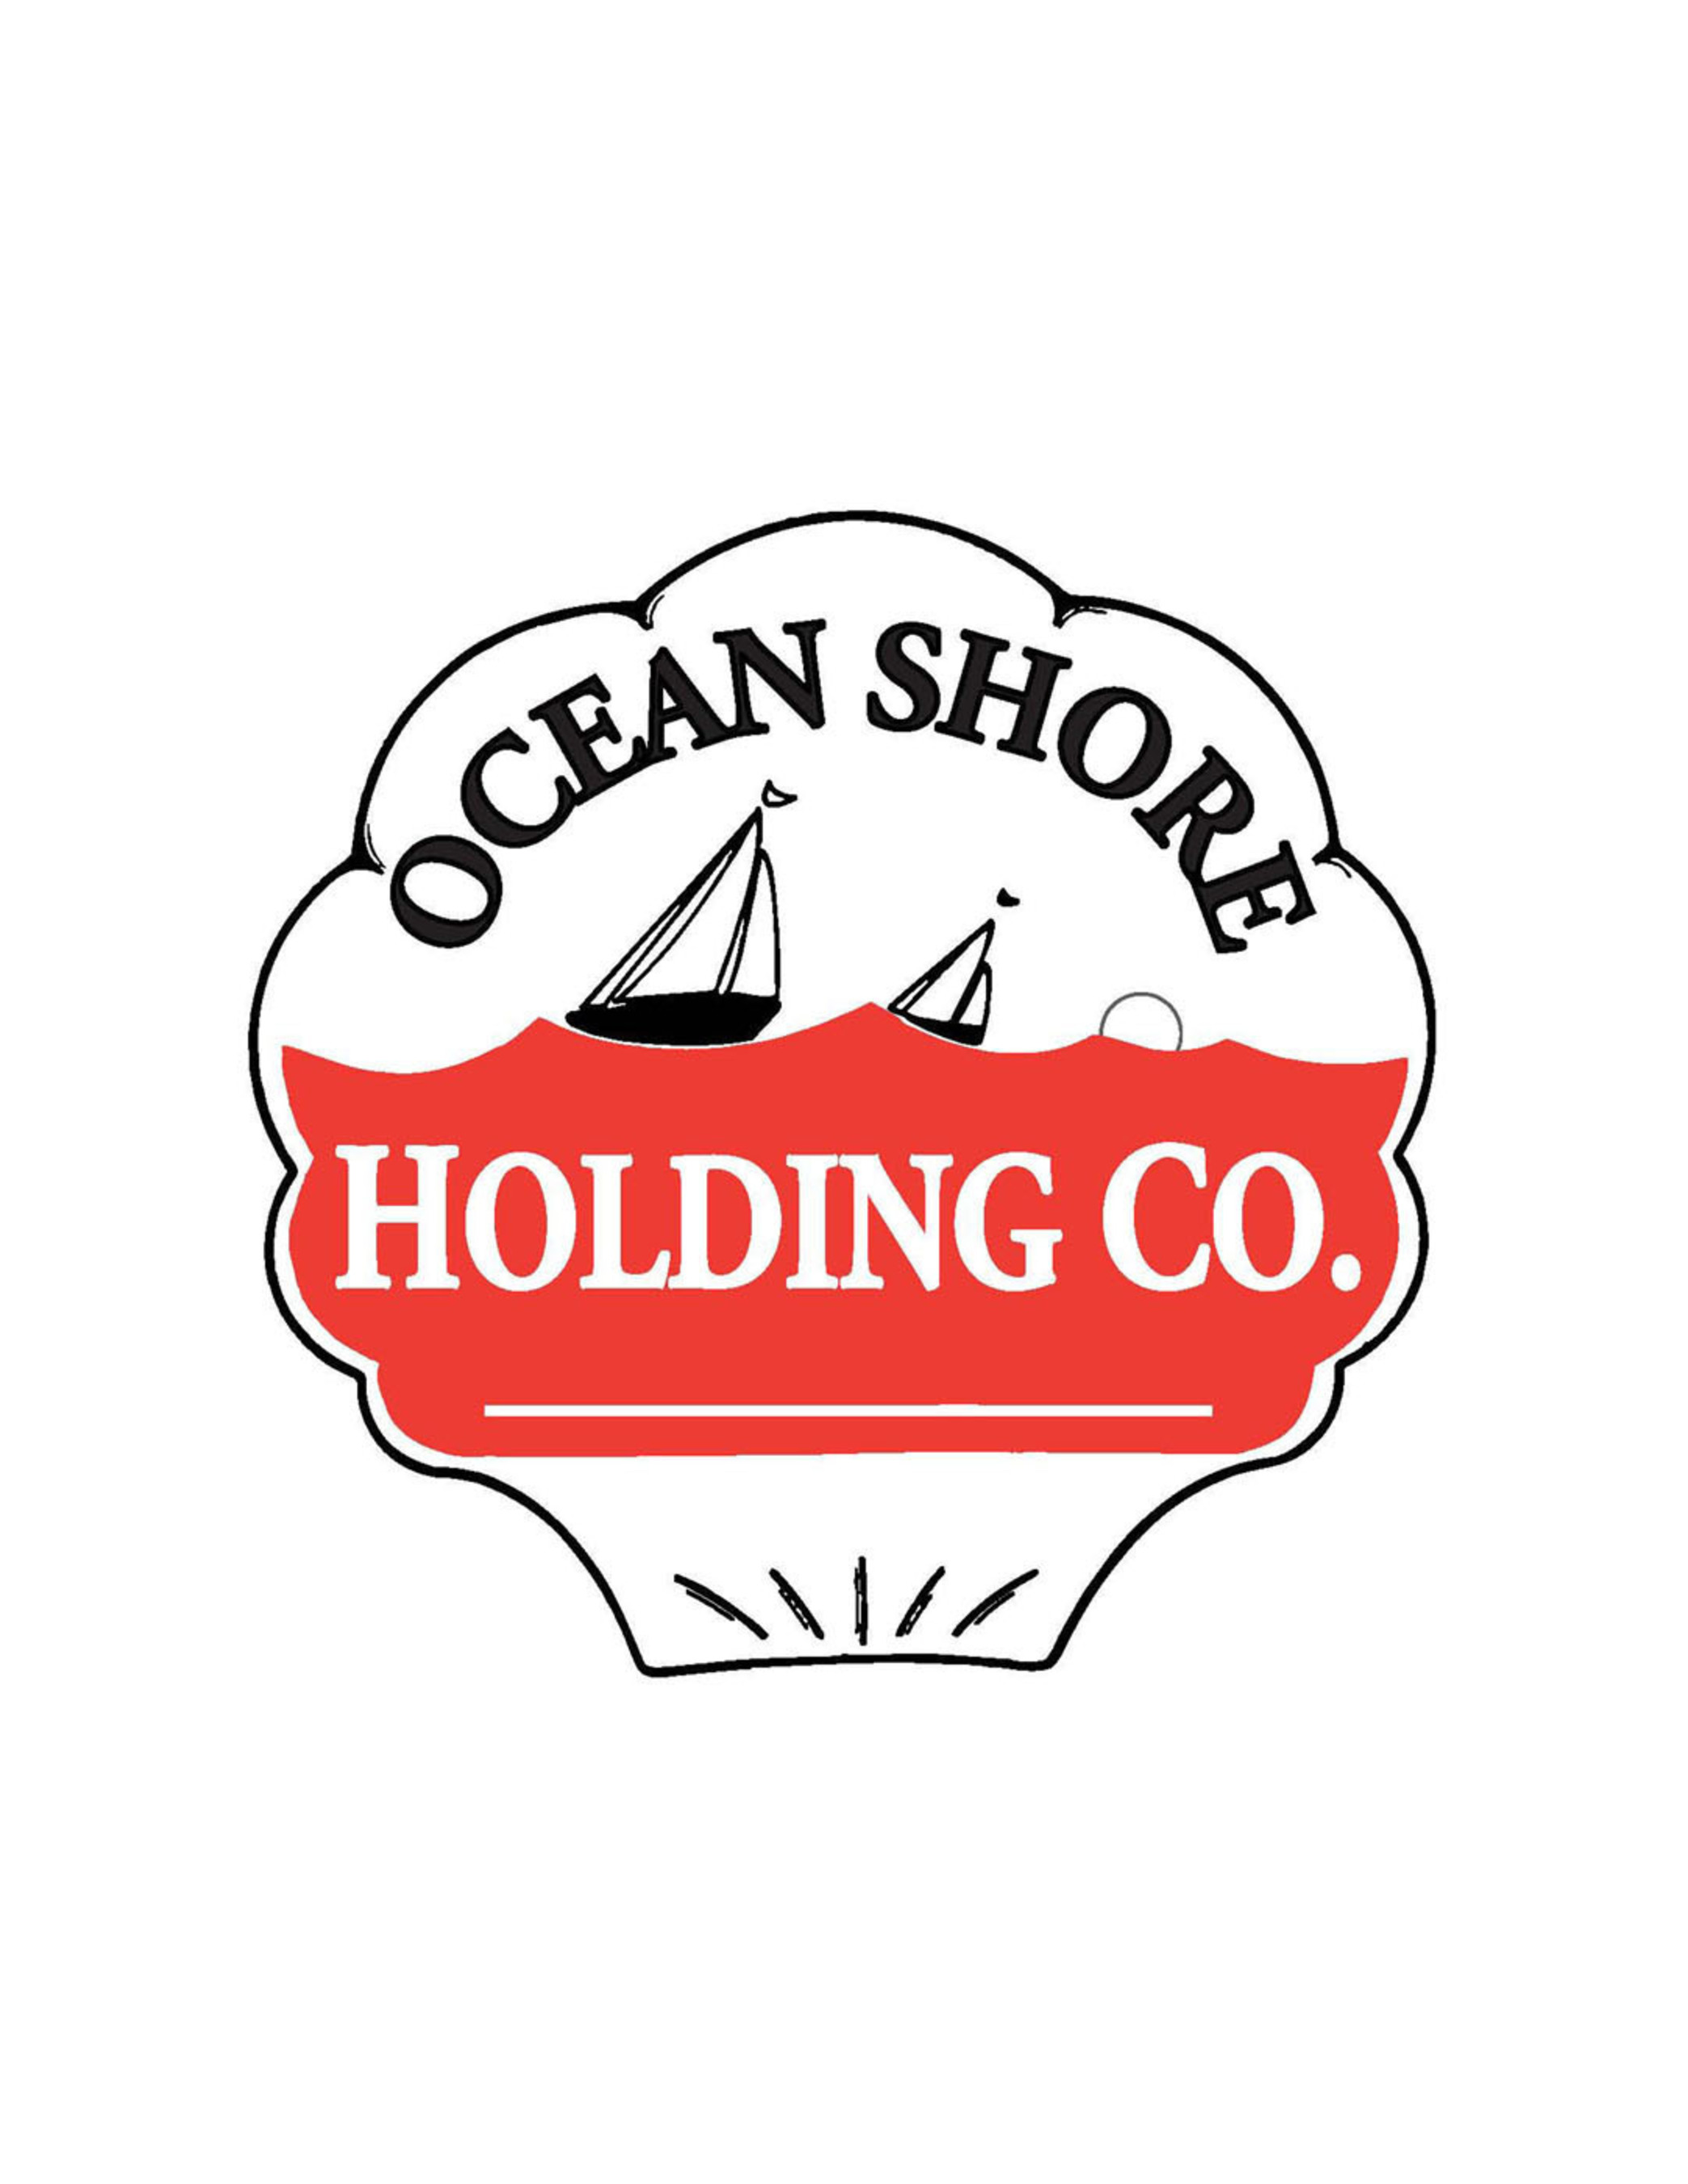 Ocean Shore Holding Co.